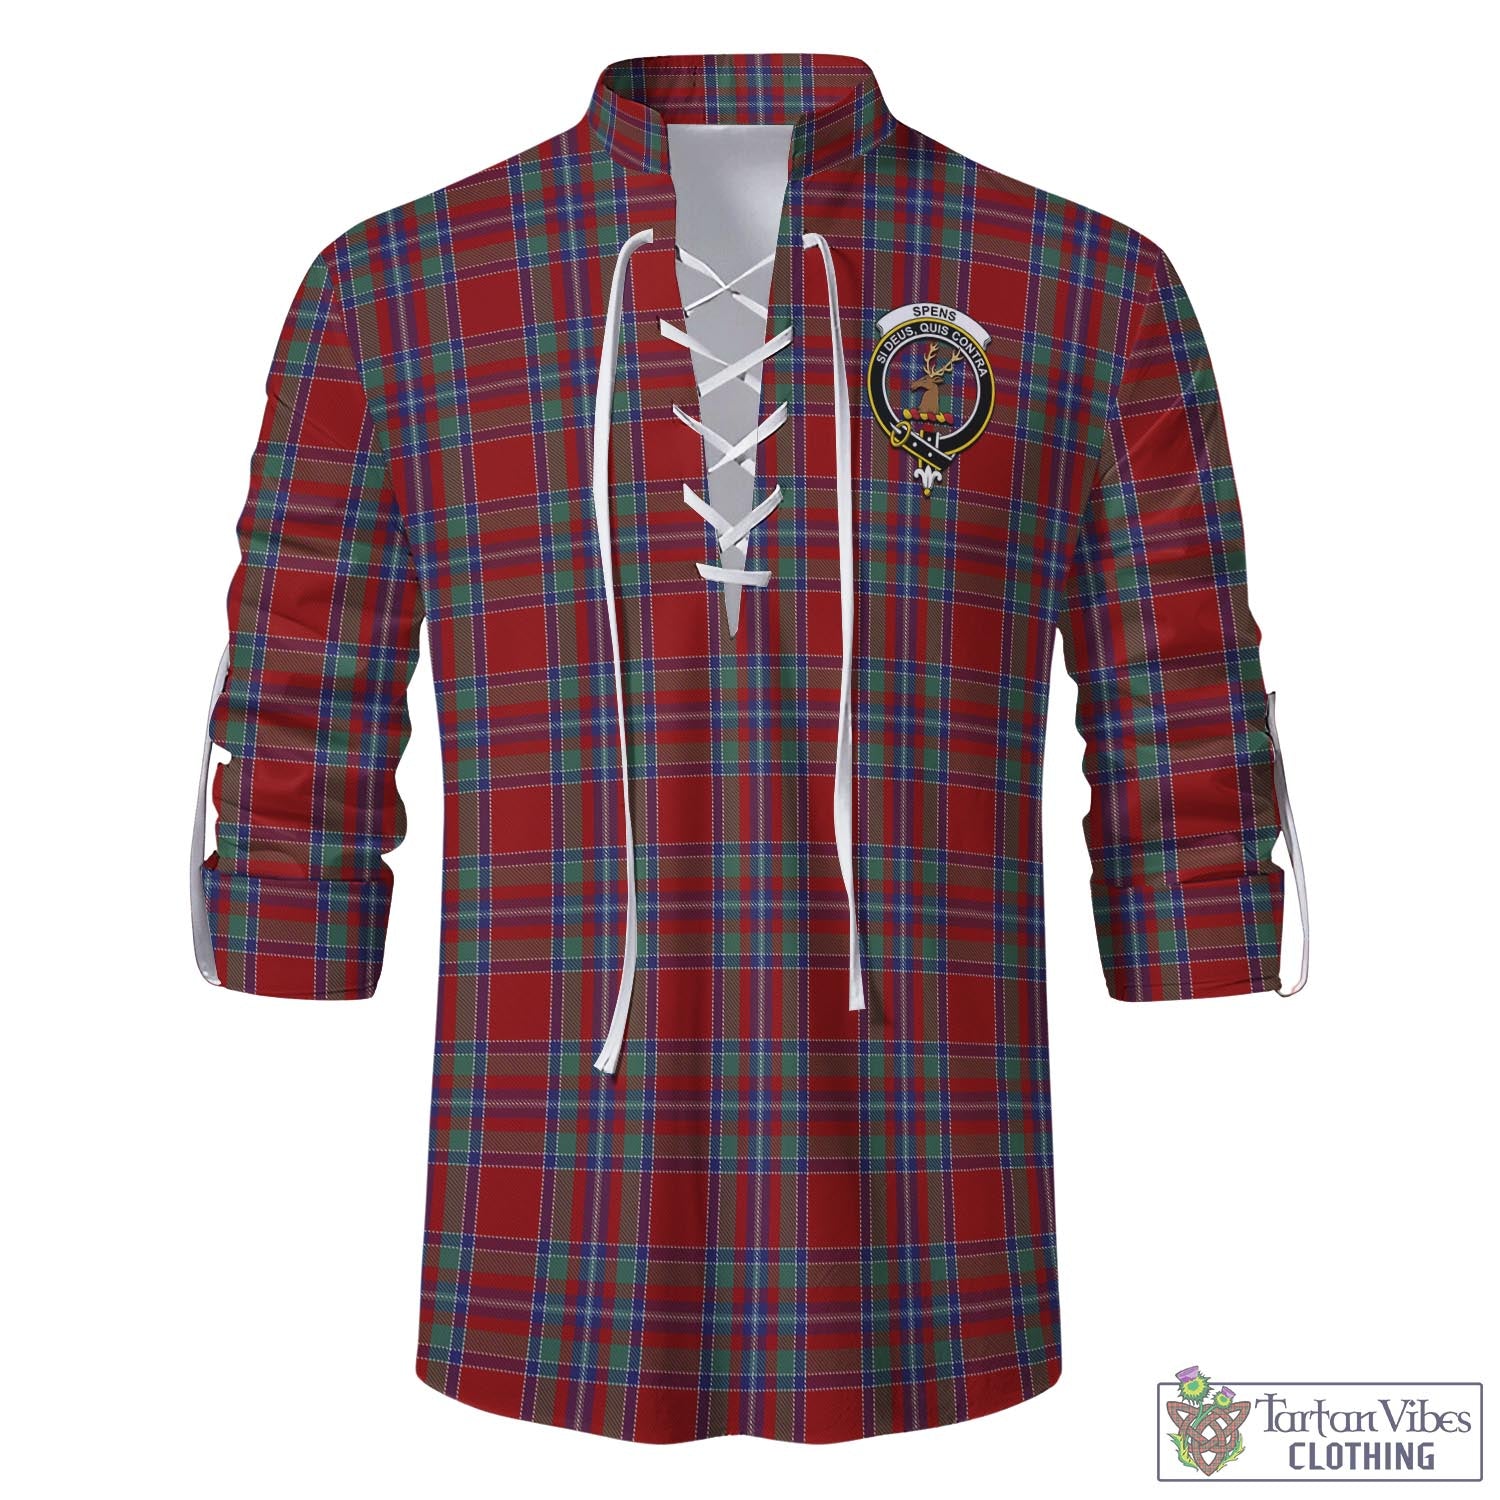 Tartan Vibes Clothing Spens Tartan Men's Scottish Traditional Jacobite Ghillie Kilt Shirt with Family Crest